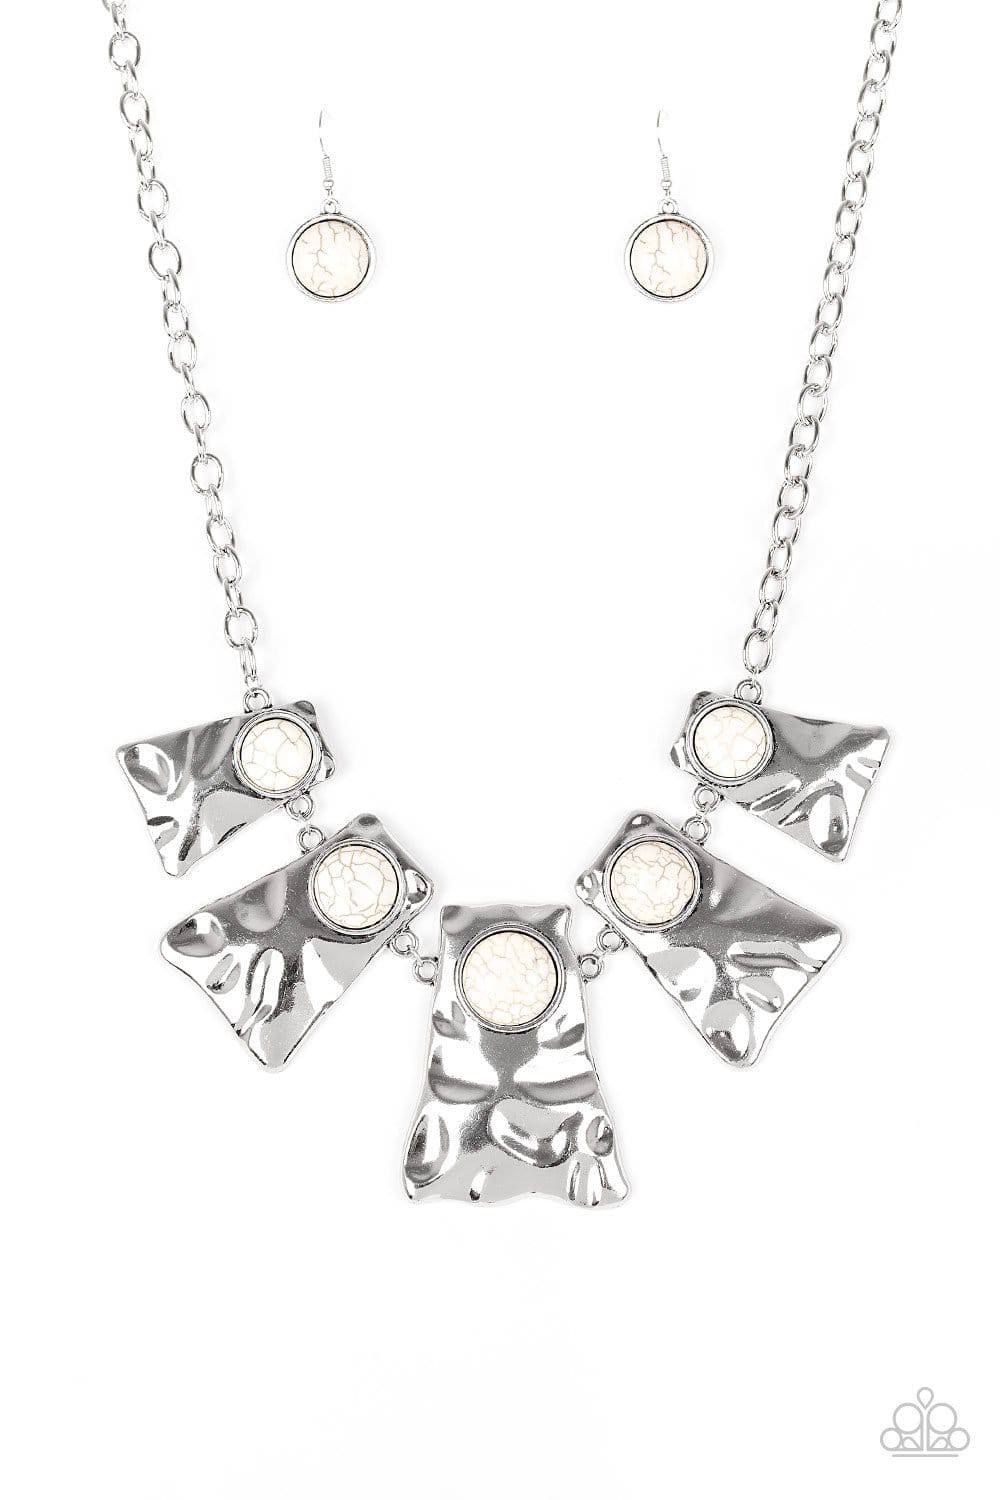 Cougar - White & Silver Necklace - Paparazzi Accessories - GlaMarous Titi Jewels